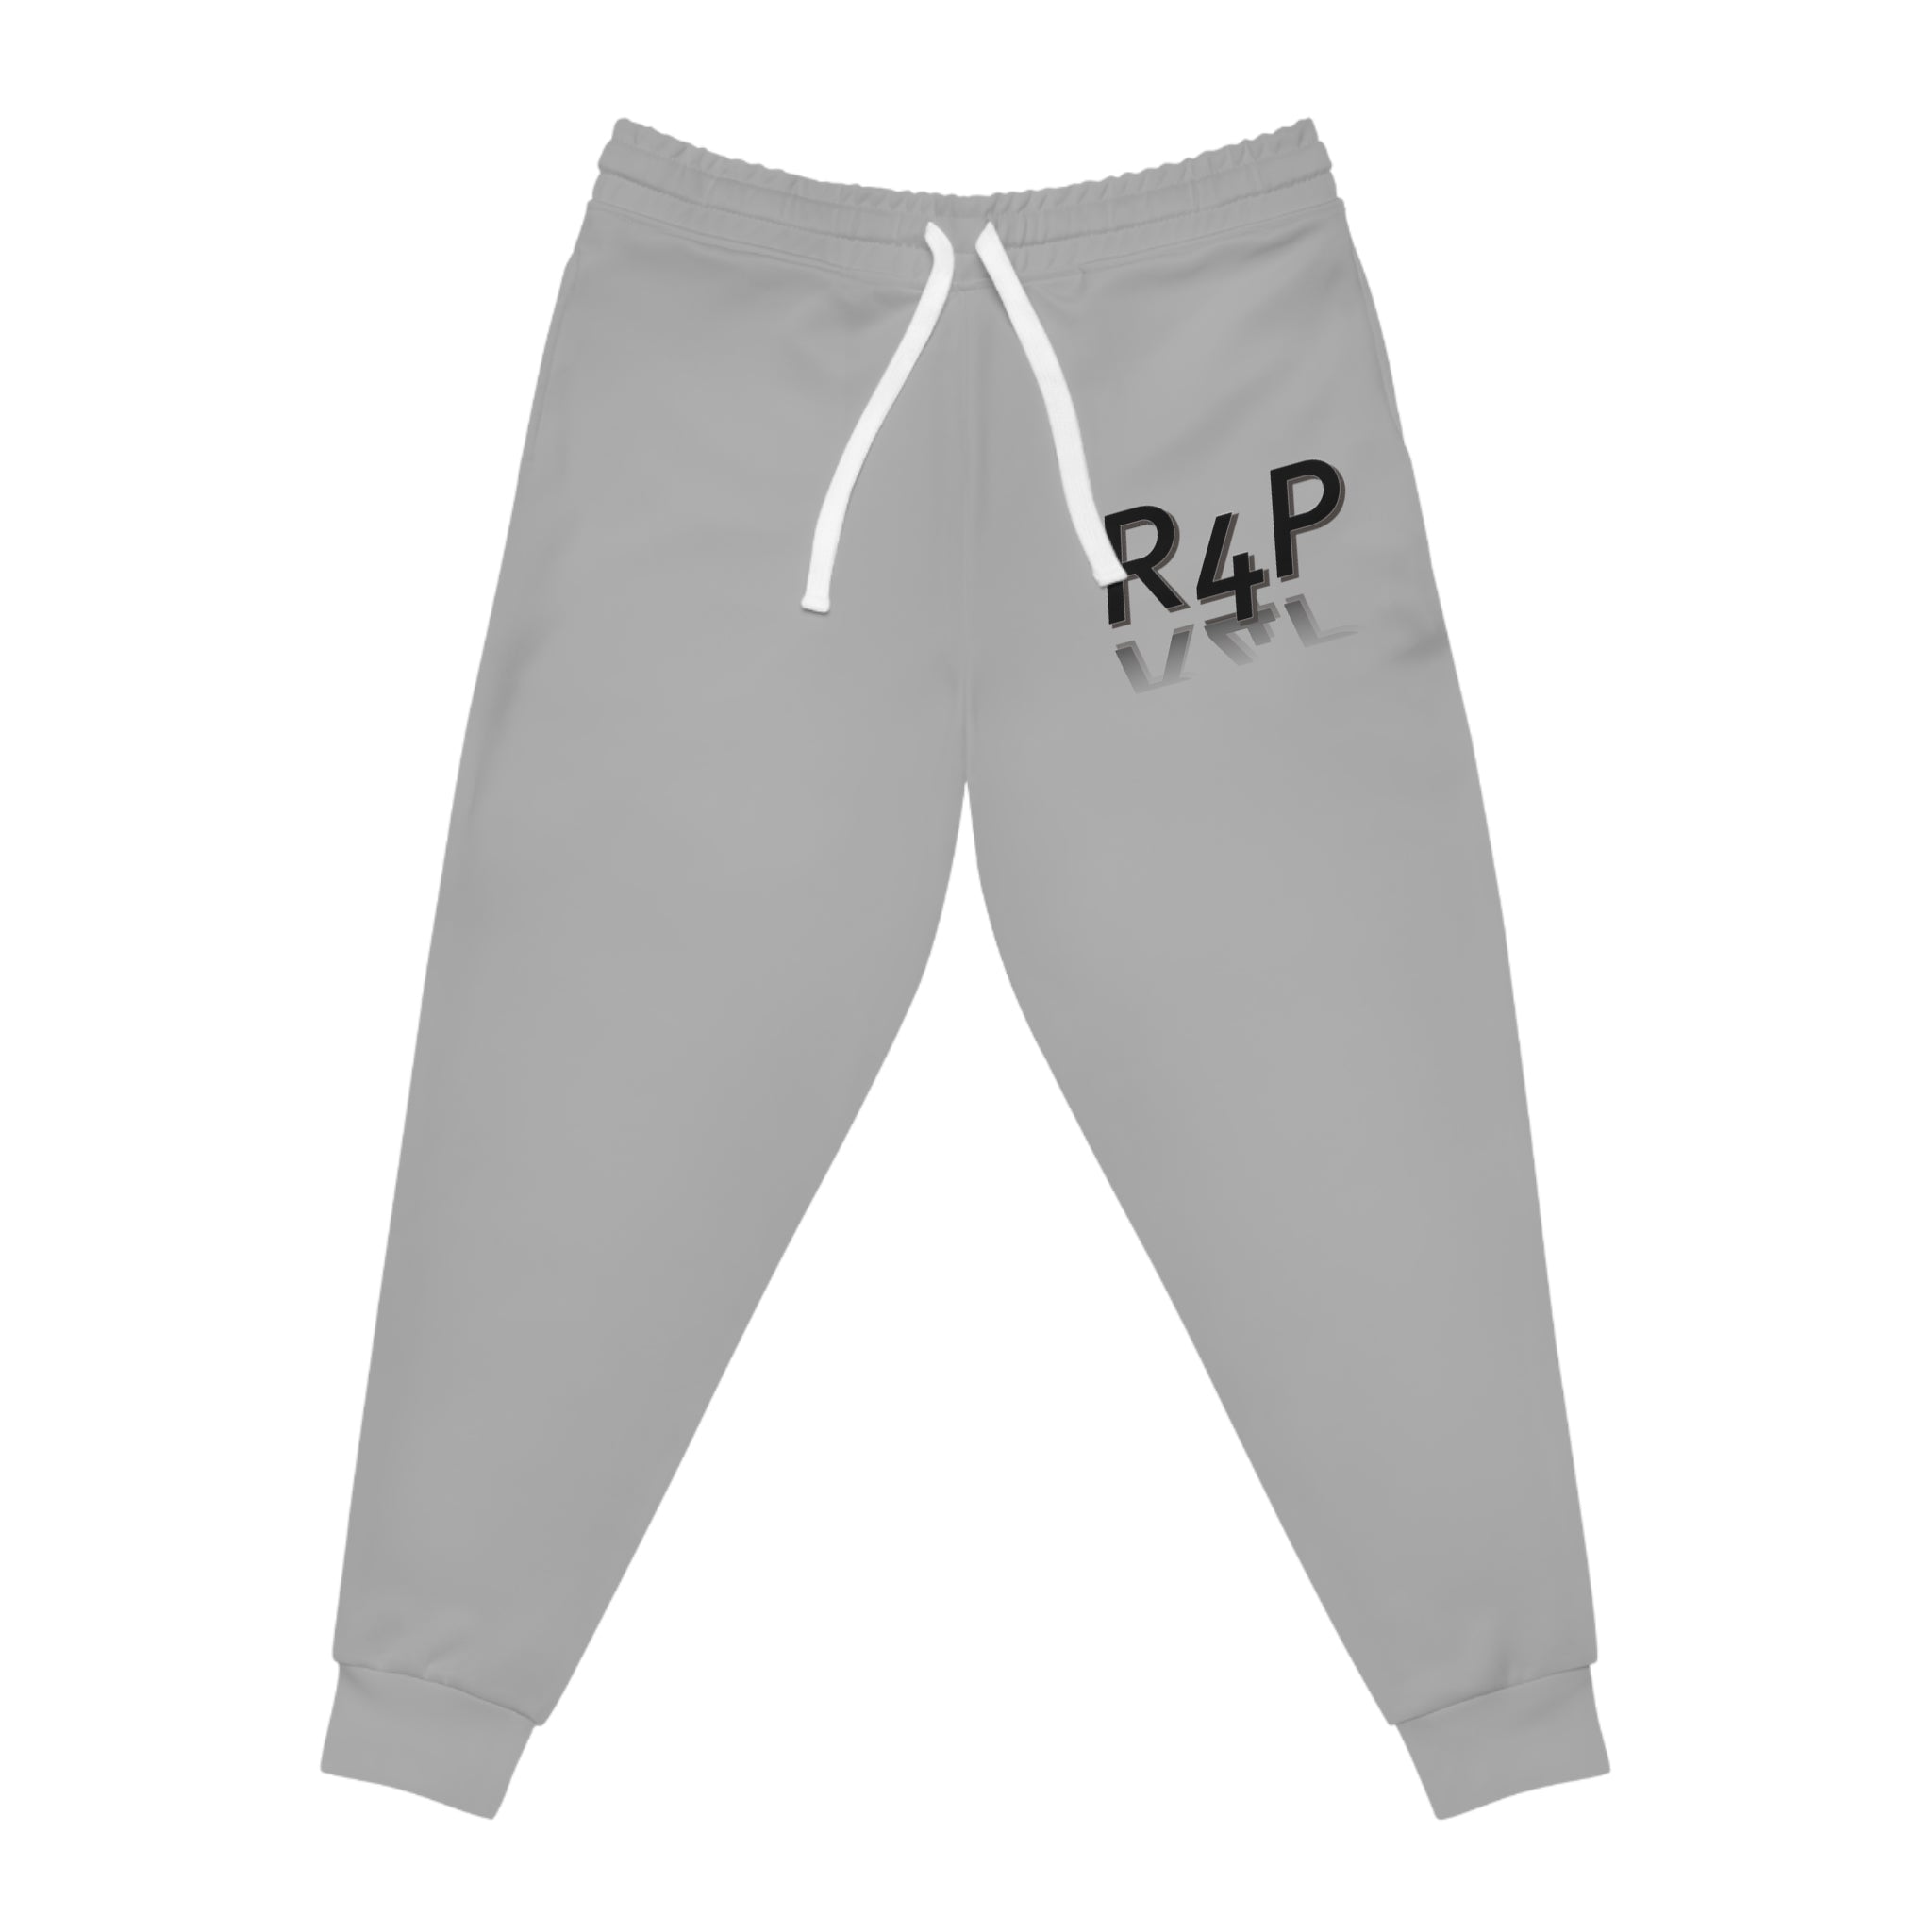 R4P Grey Joggers